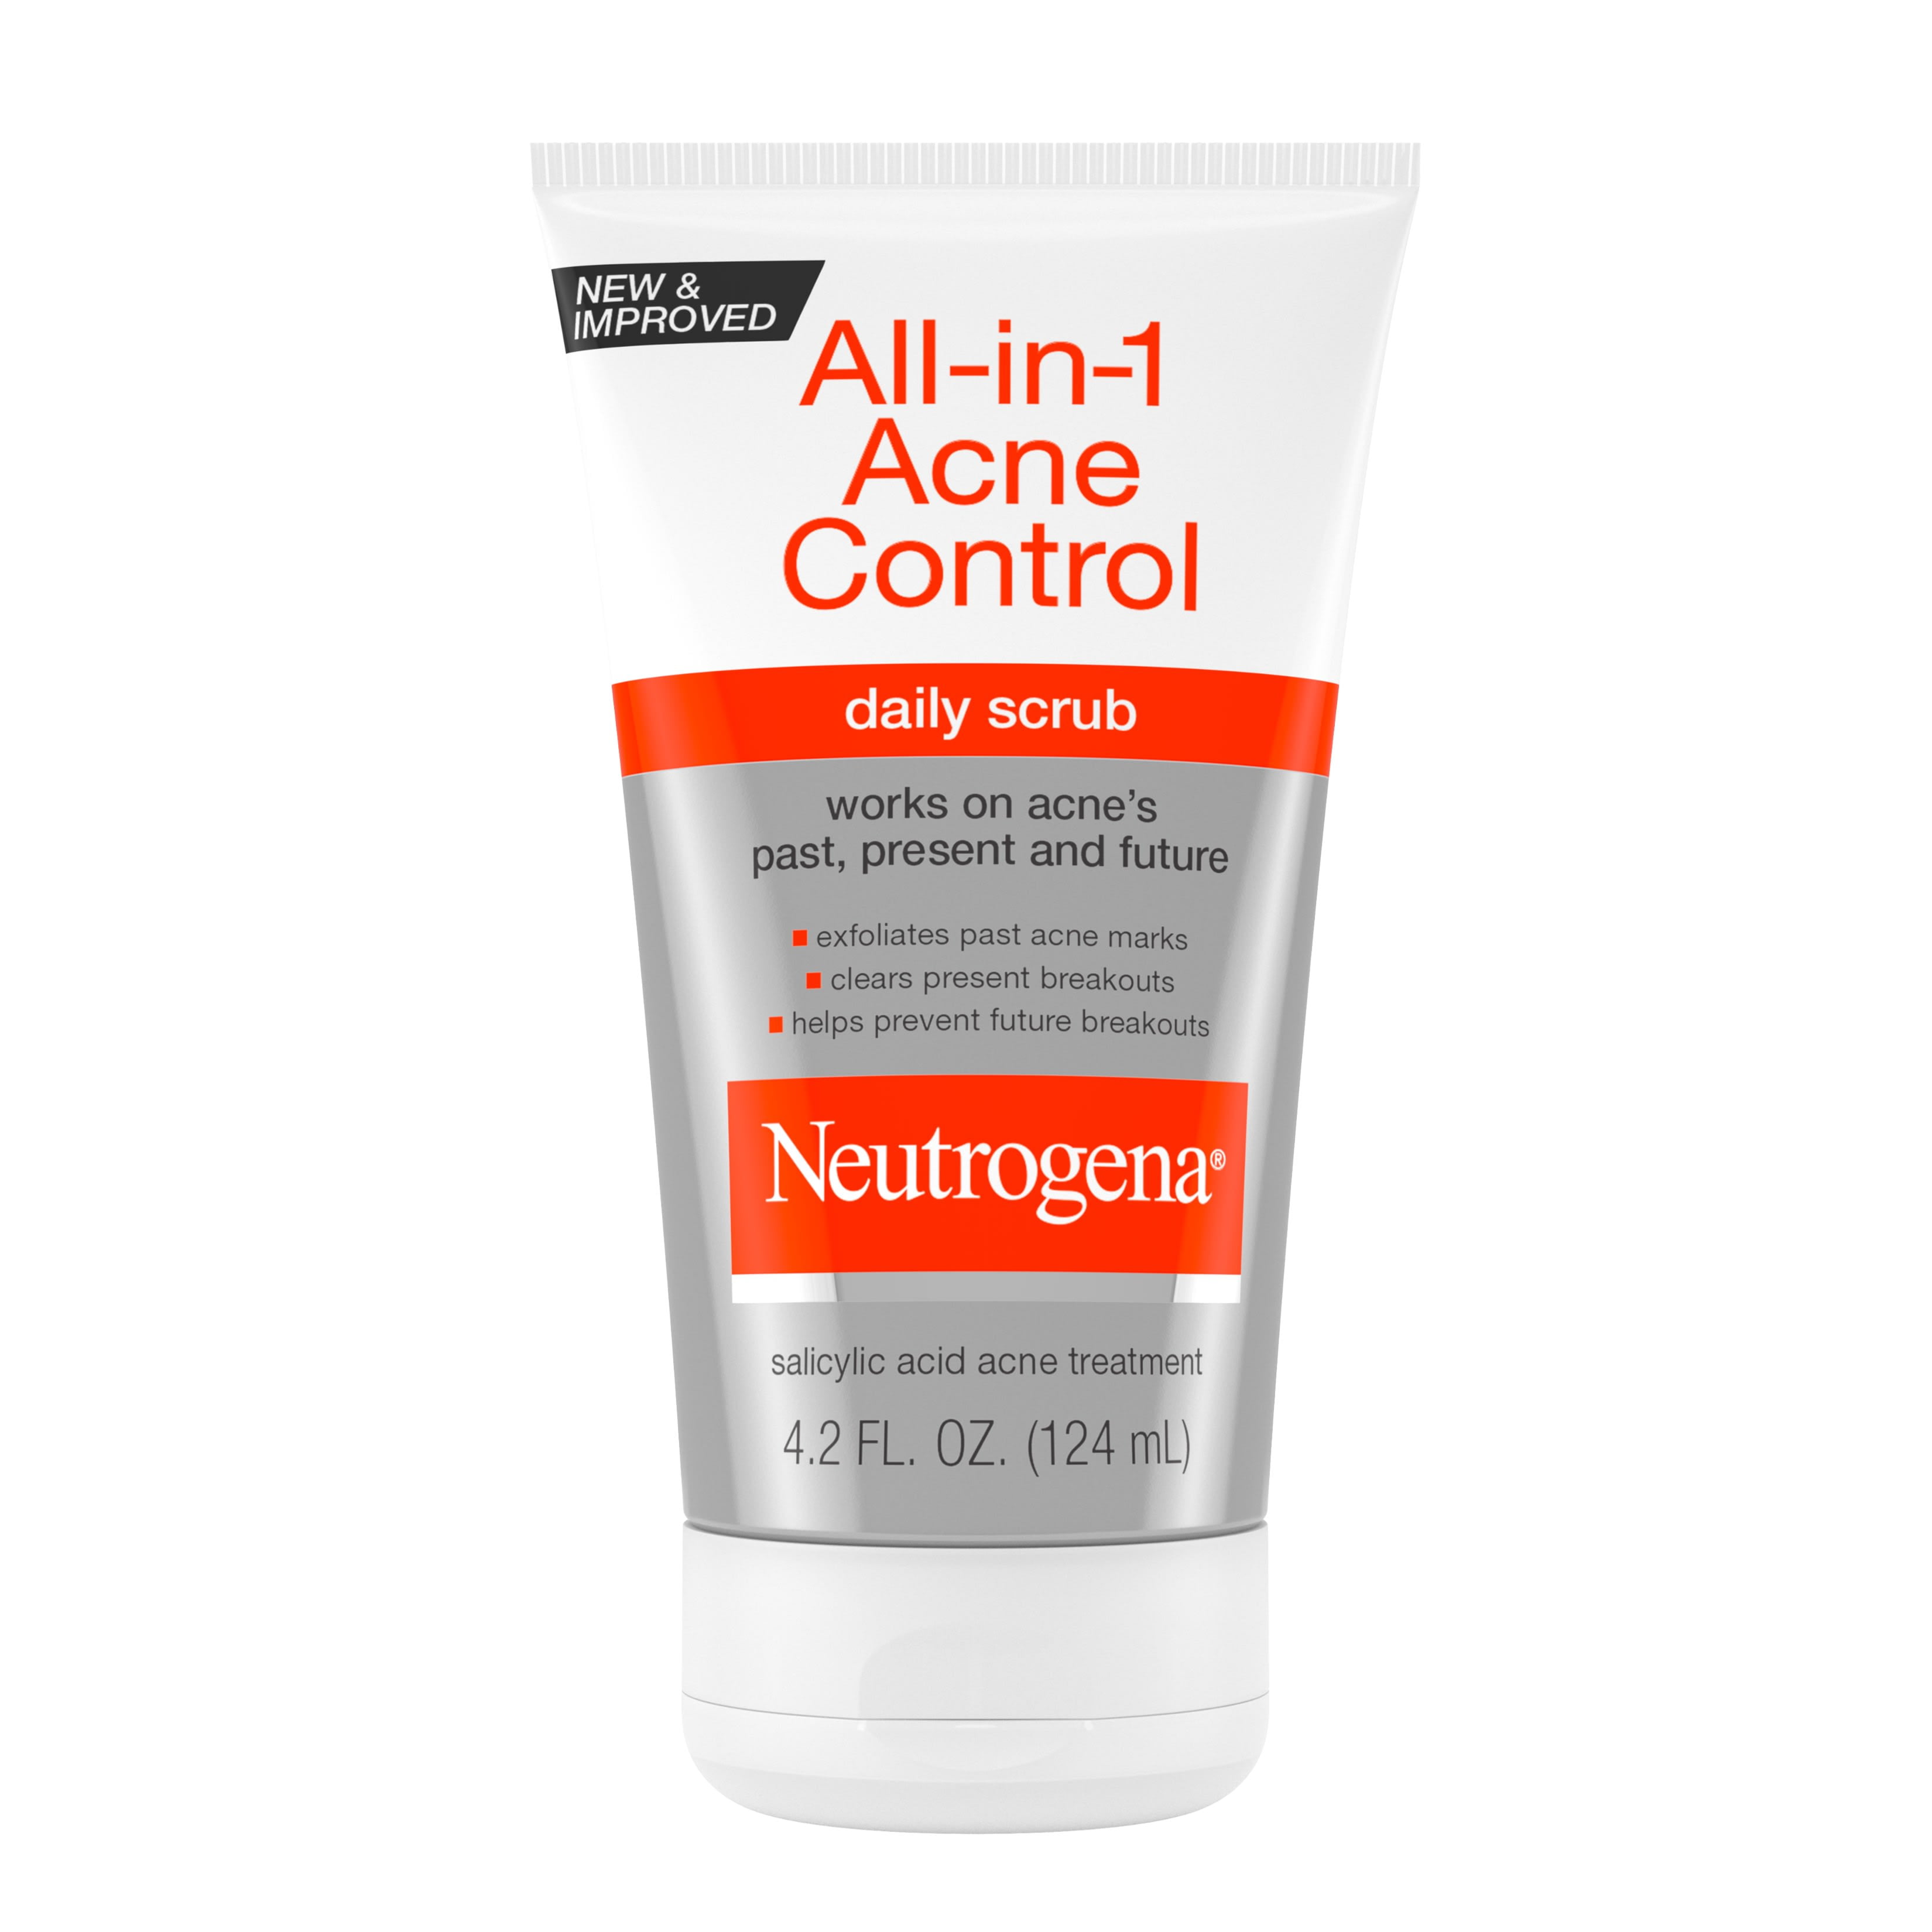 Neutrogena All-In-1 Acne Control Daily Facial Acne Scrub, 4.2 fl. oz